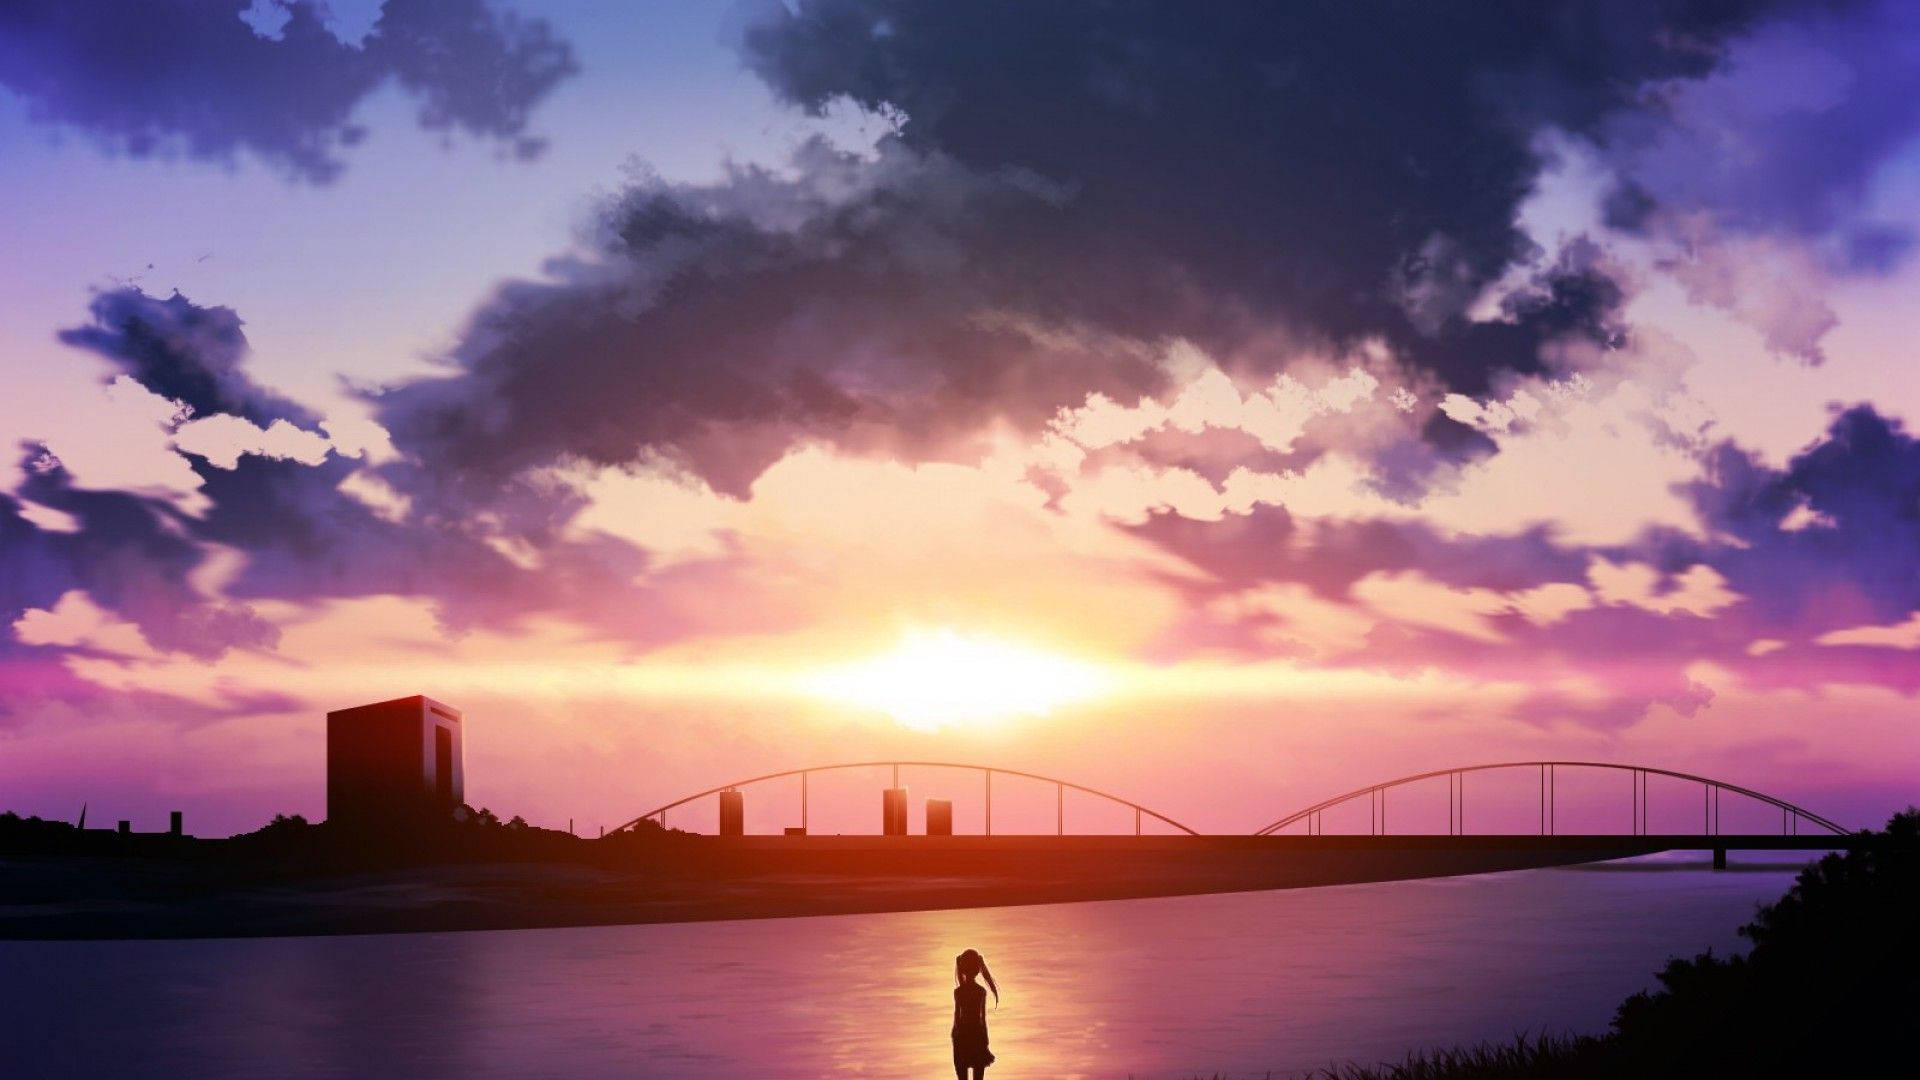 Sunset By The Bridge Anime Scenery Background